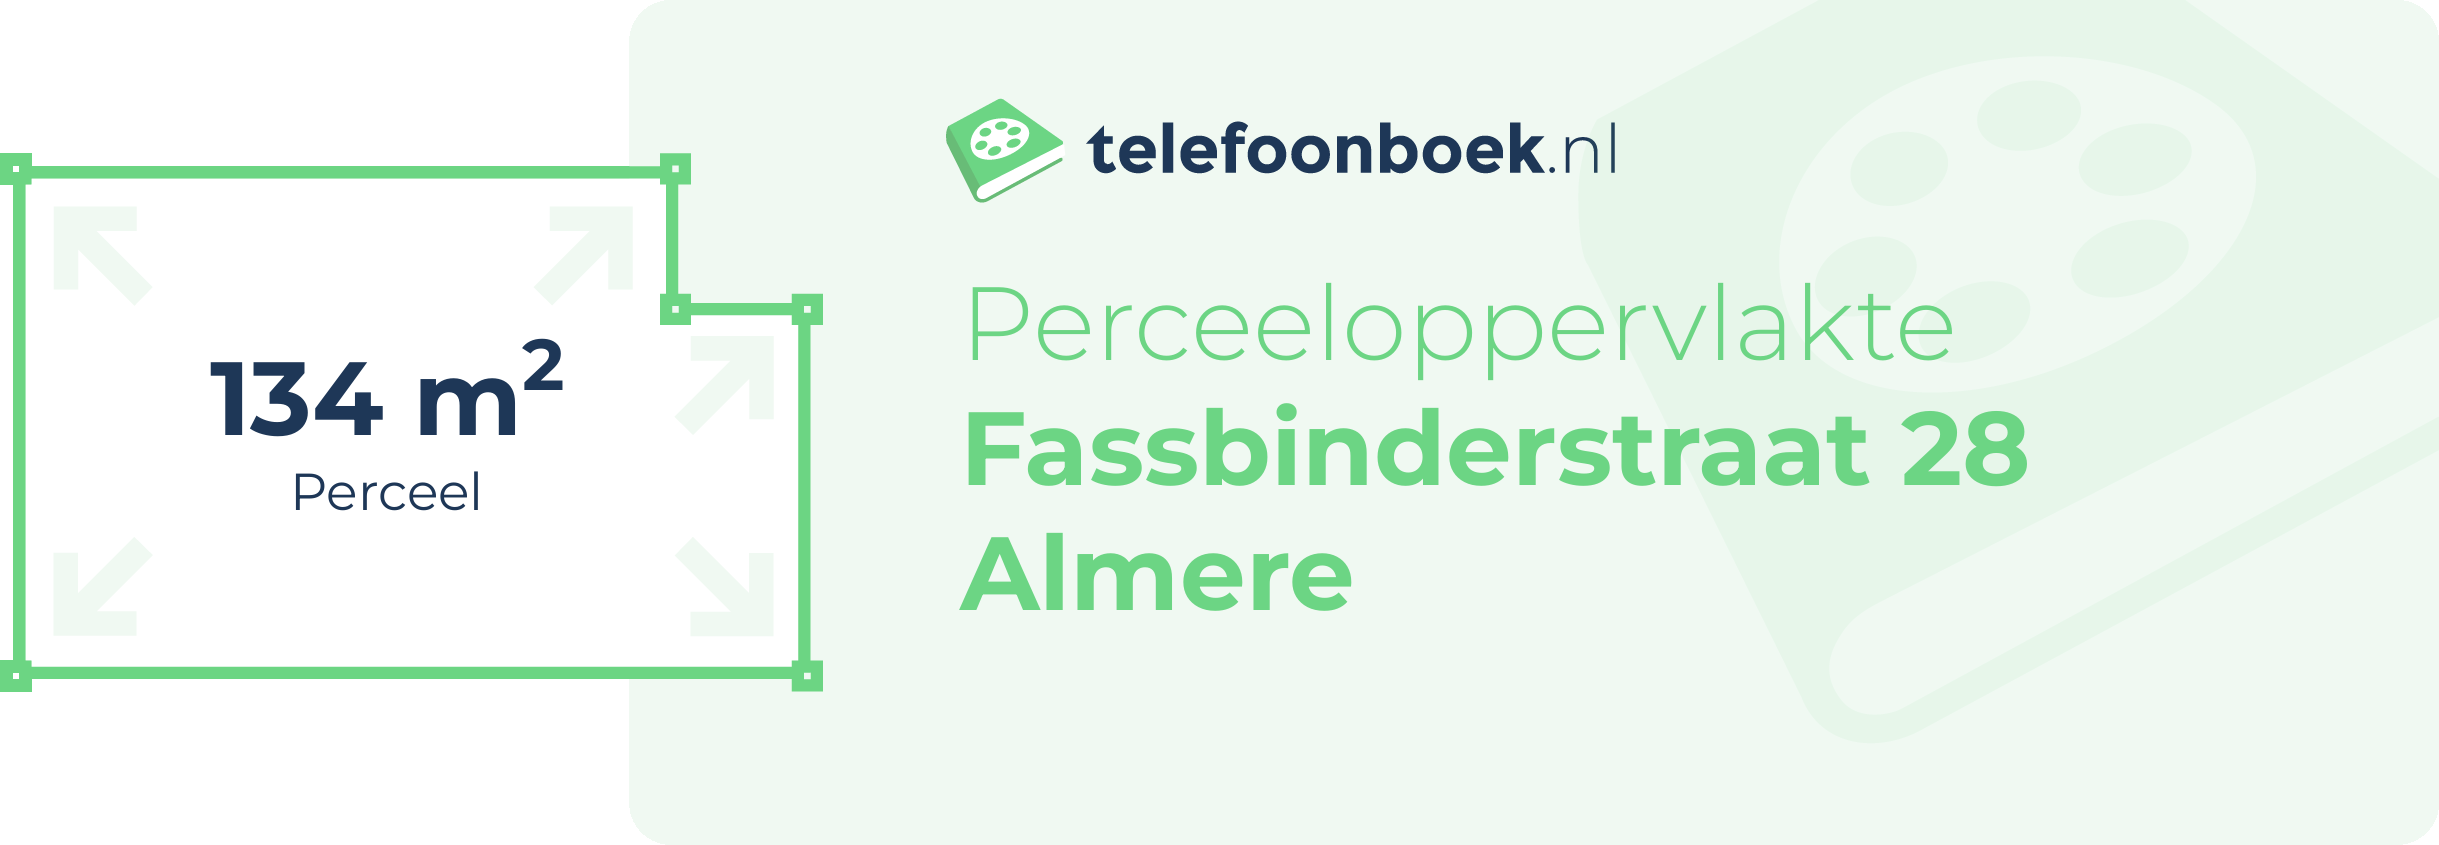 Perceeloppervlakte Fassbinderstraat 28 Almere